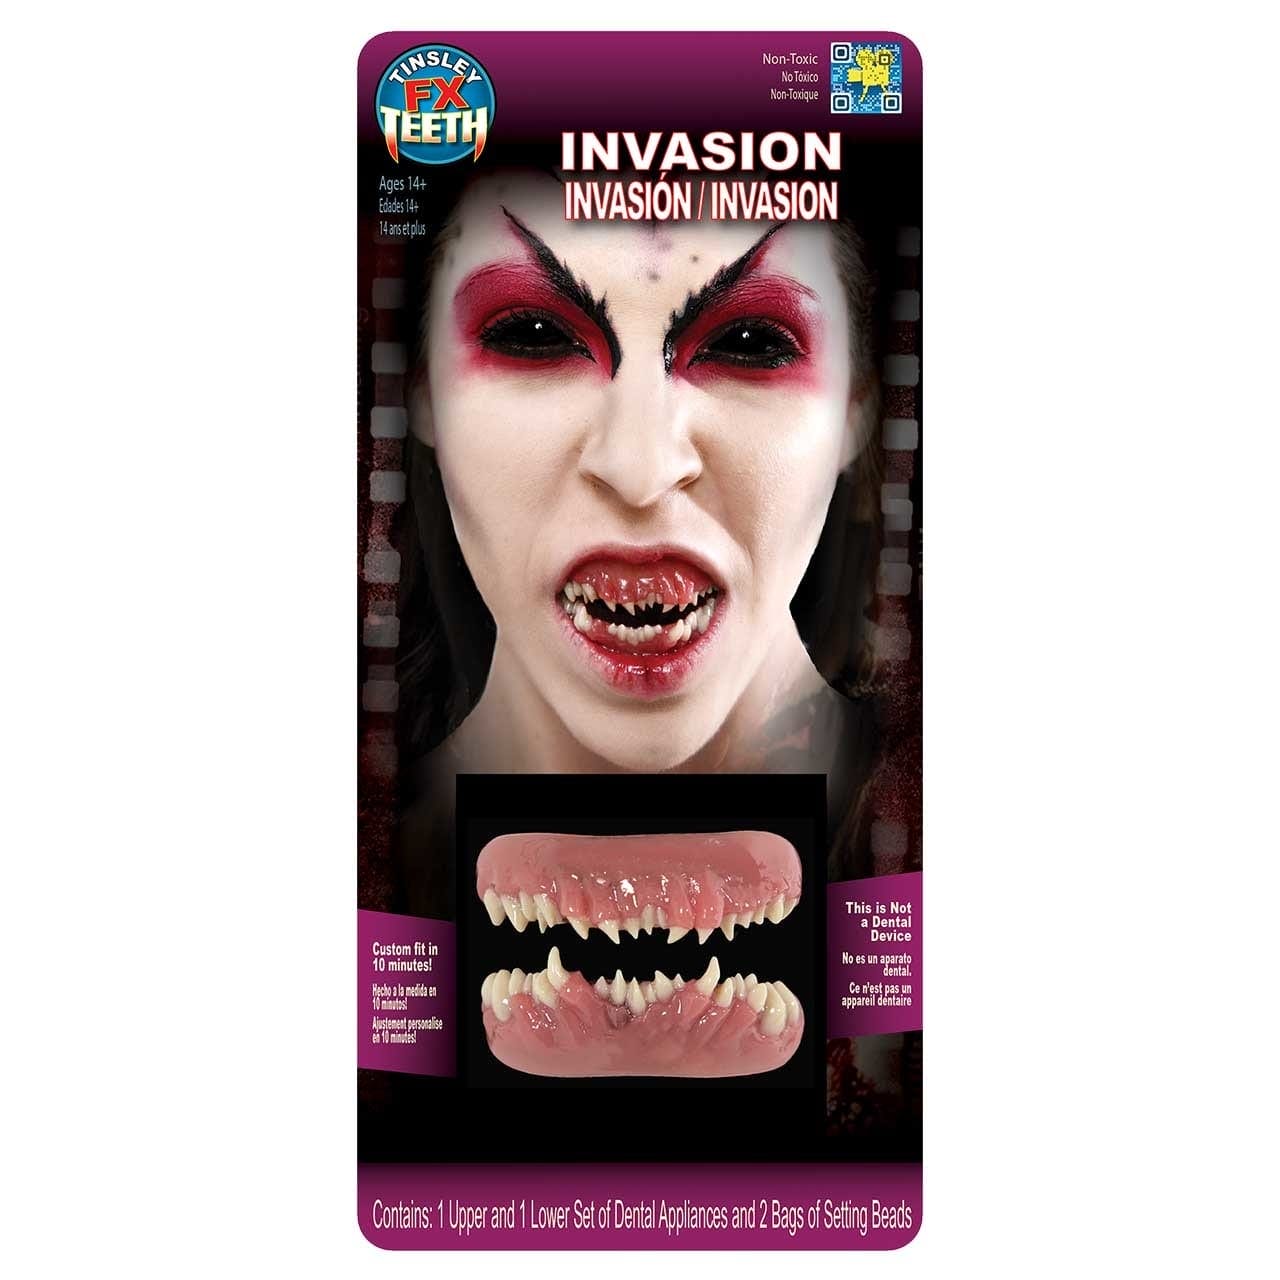 Teeth_Invasioin_Tinsley